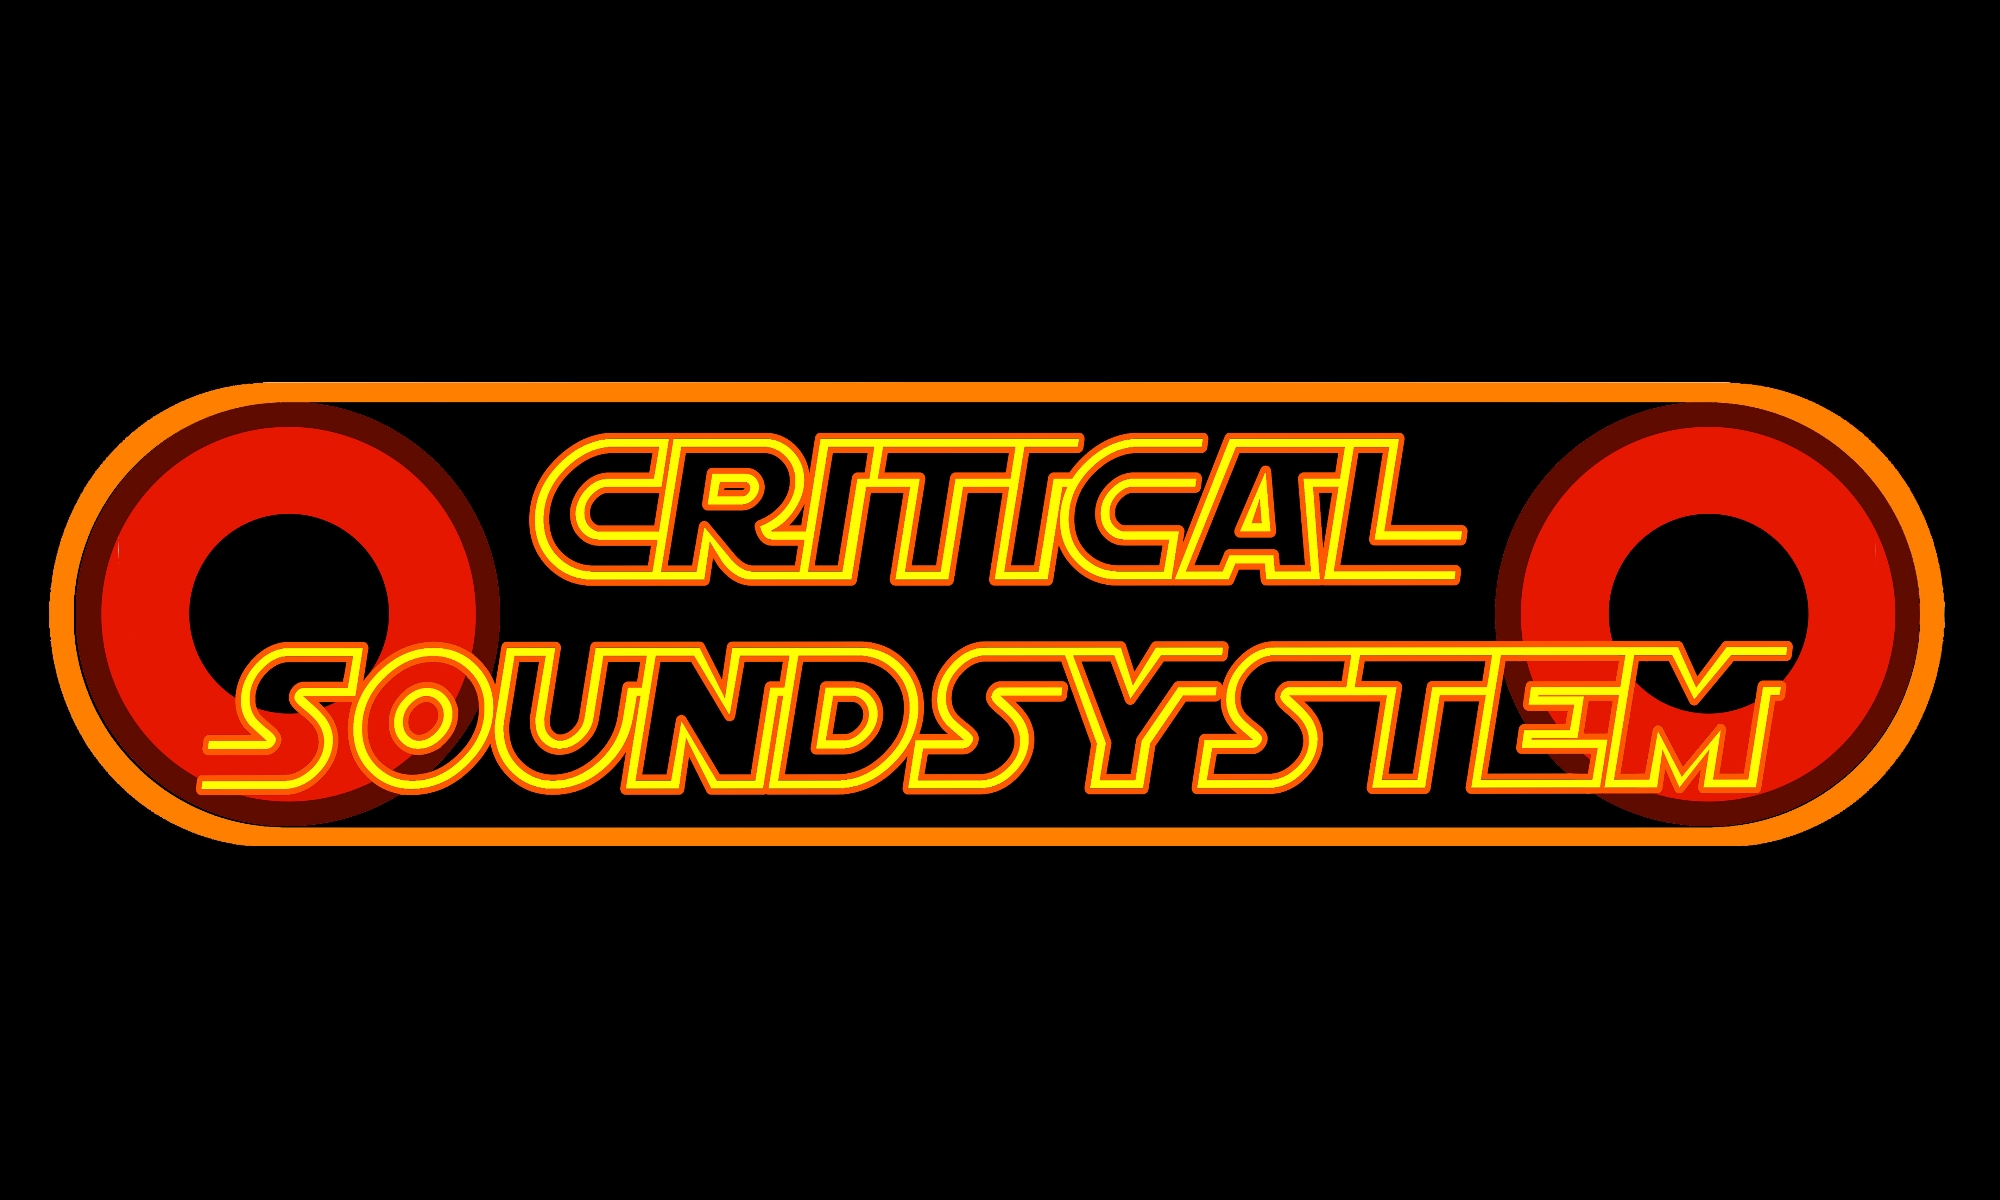 Critical Soundsystem